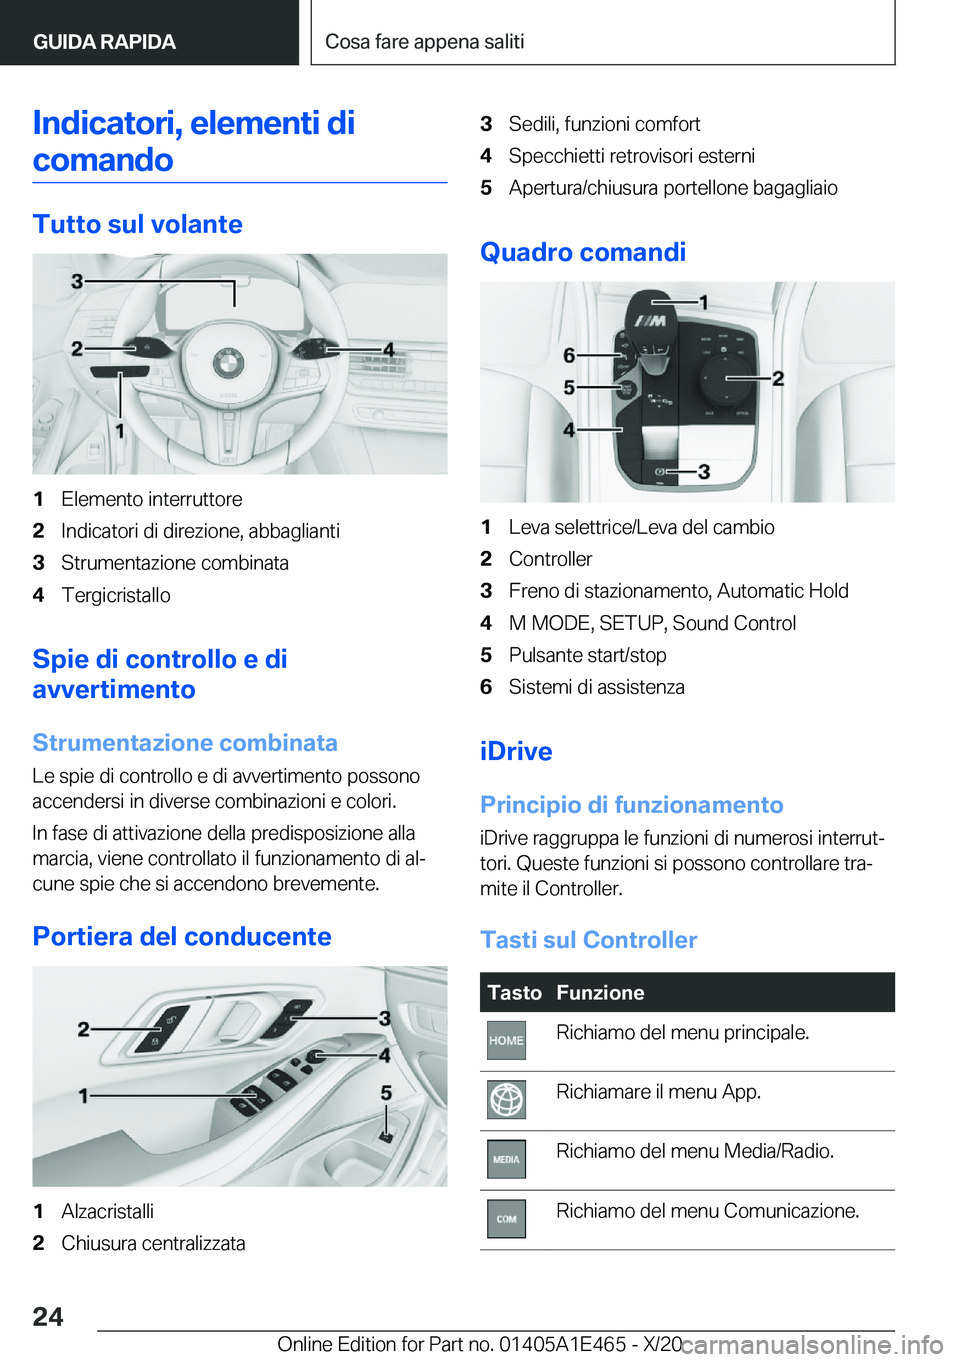 BMW M3 2021  Libretti Di Uso E manutenzione (in Italian) �I�n�d�i�c�a�t�o�r�i�,��e�l�e�m�e�n�t�i��d�i�c�o�m�a�n�d�o
�T�u�t�t�o��s�u�l��v�o�l�a�n�t�e
�1�E�l�e�m�e�n�t�o��i�n�t�e�r�r�u�t�t�o�r�e�2�I�n�d�i�c�a�t�o�r�i��d�i��d�i�r�e�z�i�o�n�e�,��a�b�b�a